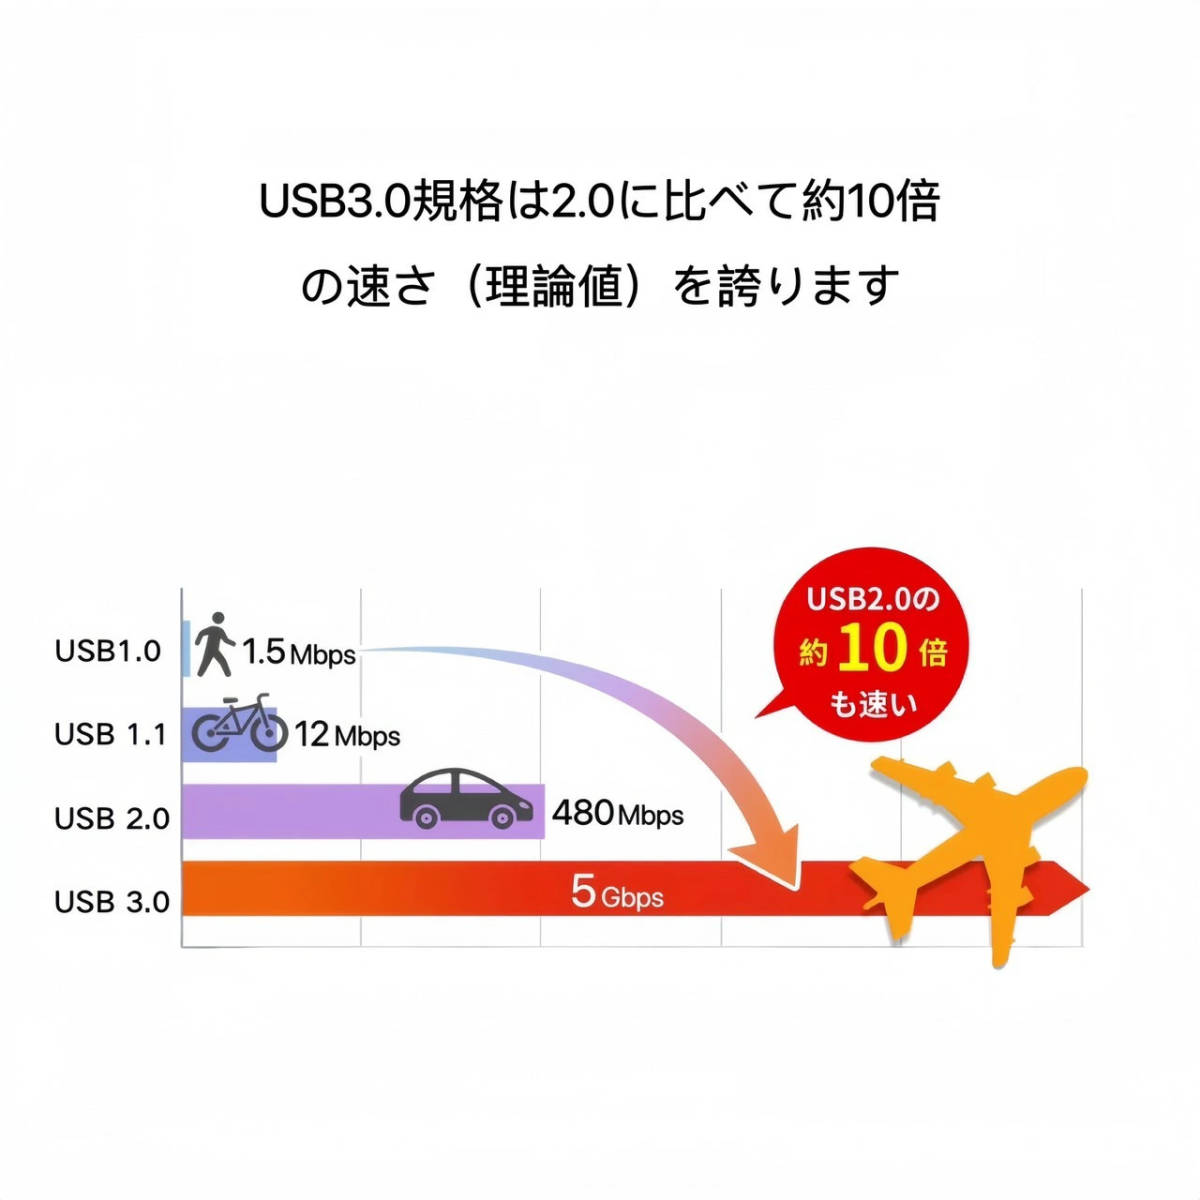 Lightning USB 変換アダプタ OTG USB3.0 iPhone iPad iPod互換対応 iOSデバイス